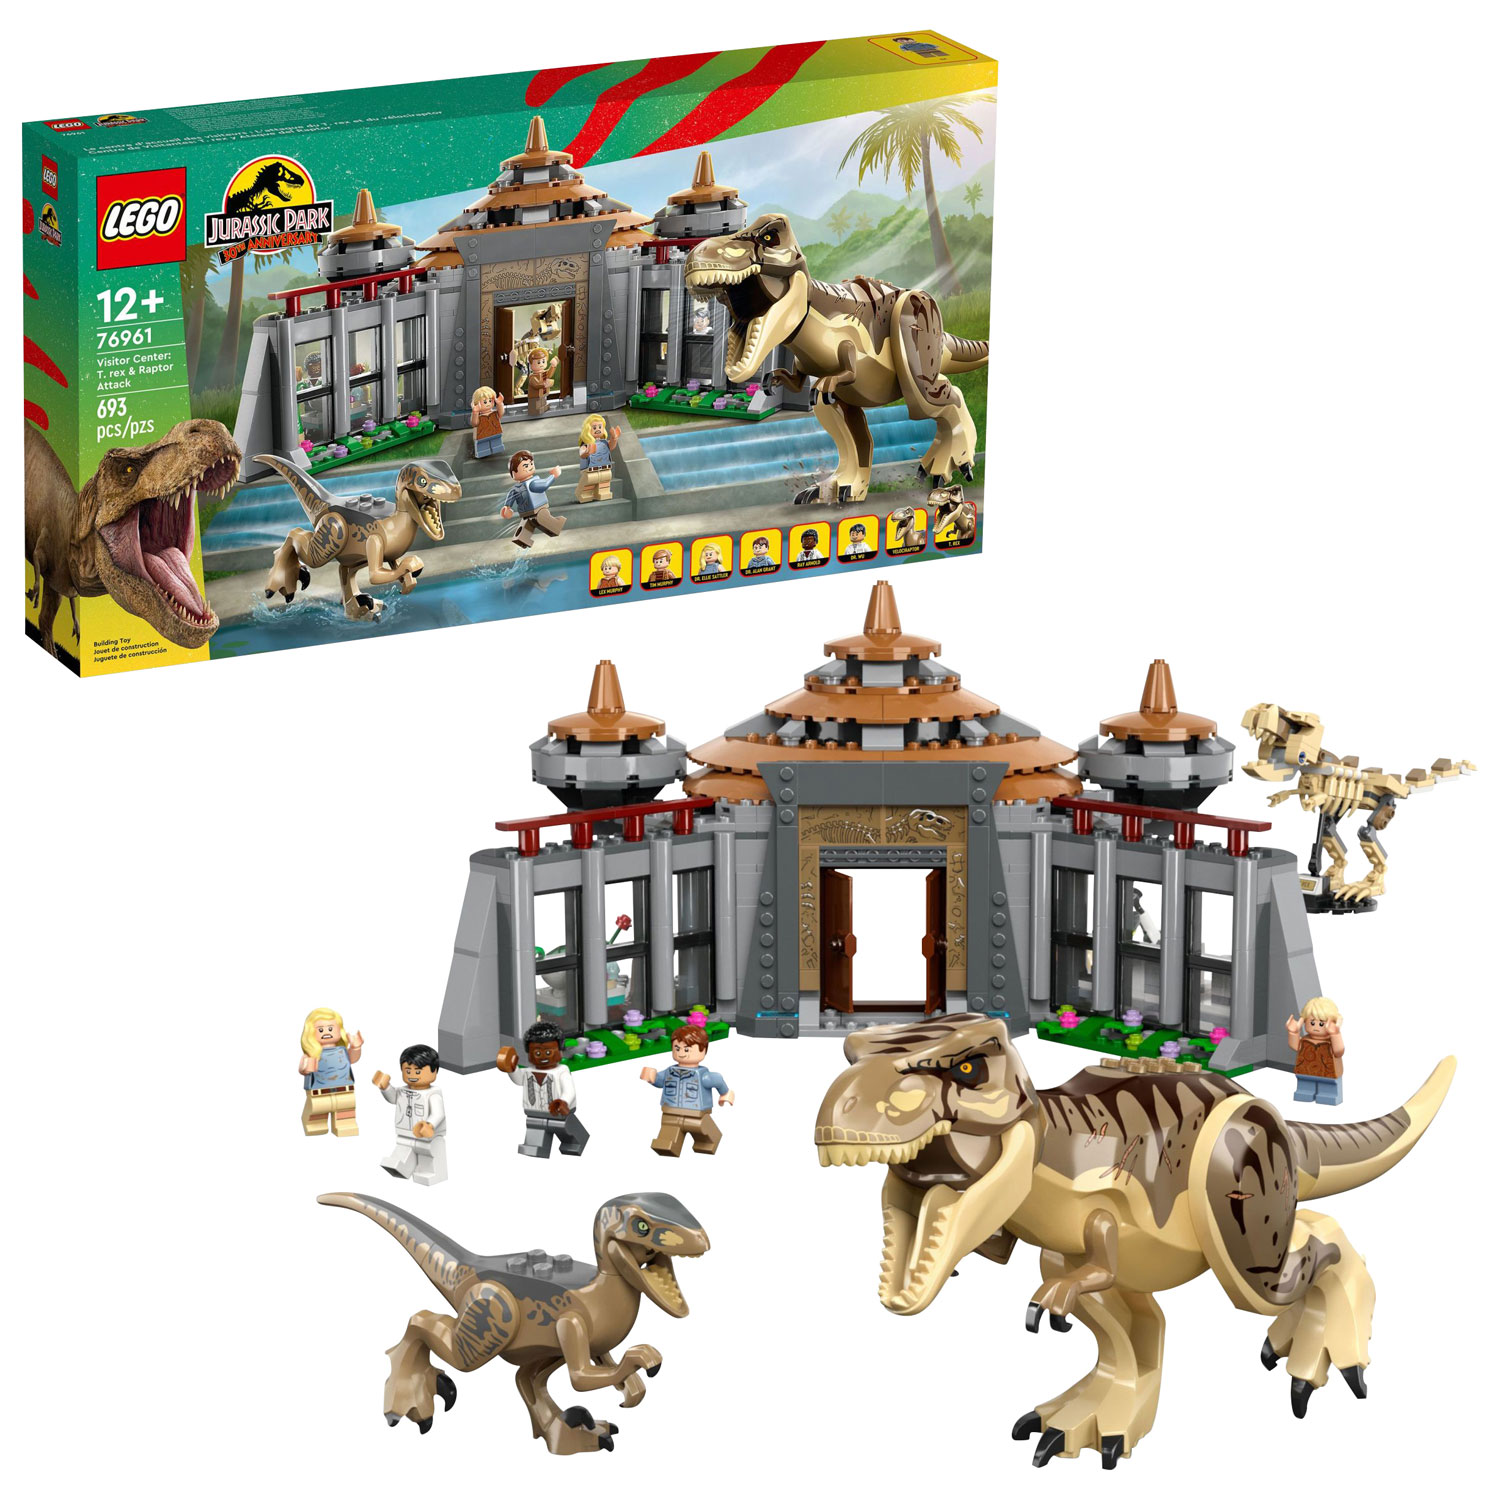 LEGO Jurassic Park: Visitor Center T-rex & Raptor Attack - 693 Pieces (76961)